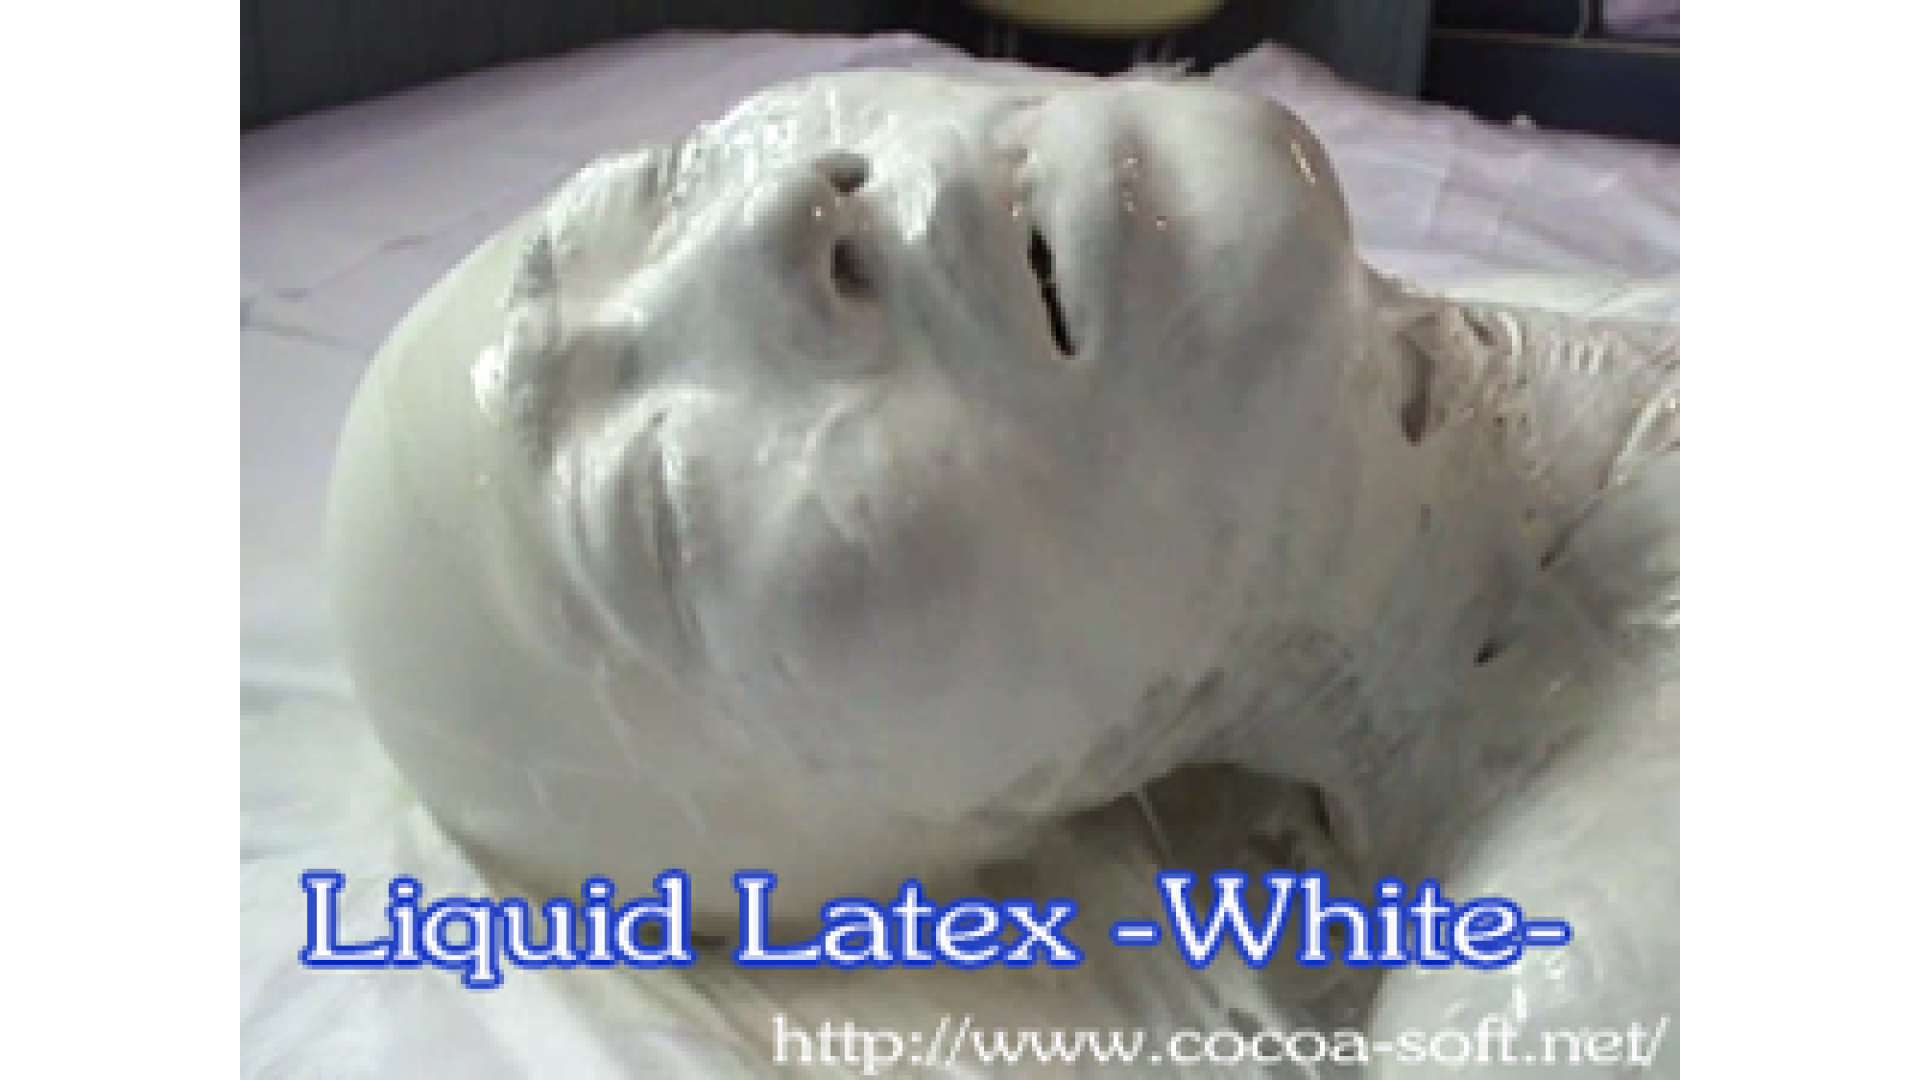 LIQUID LATEX -WHITE-